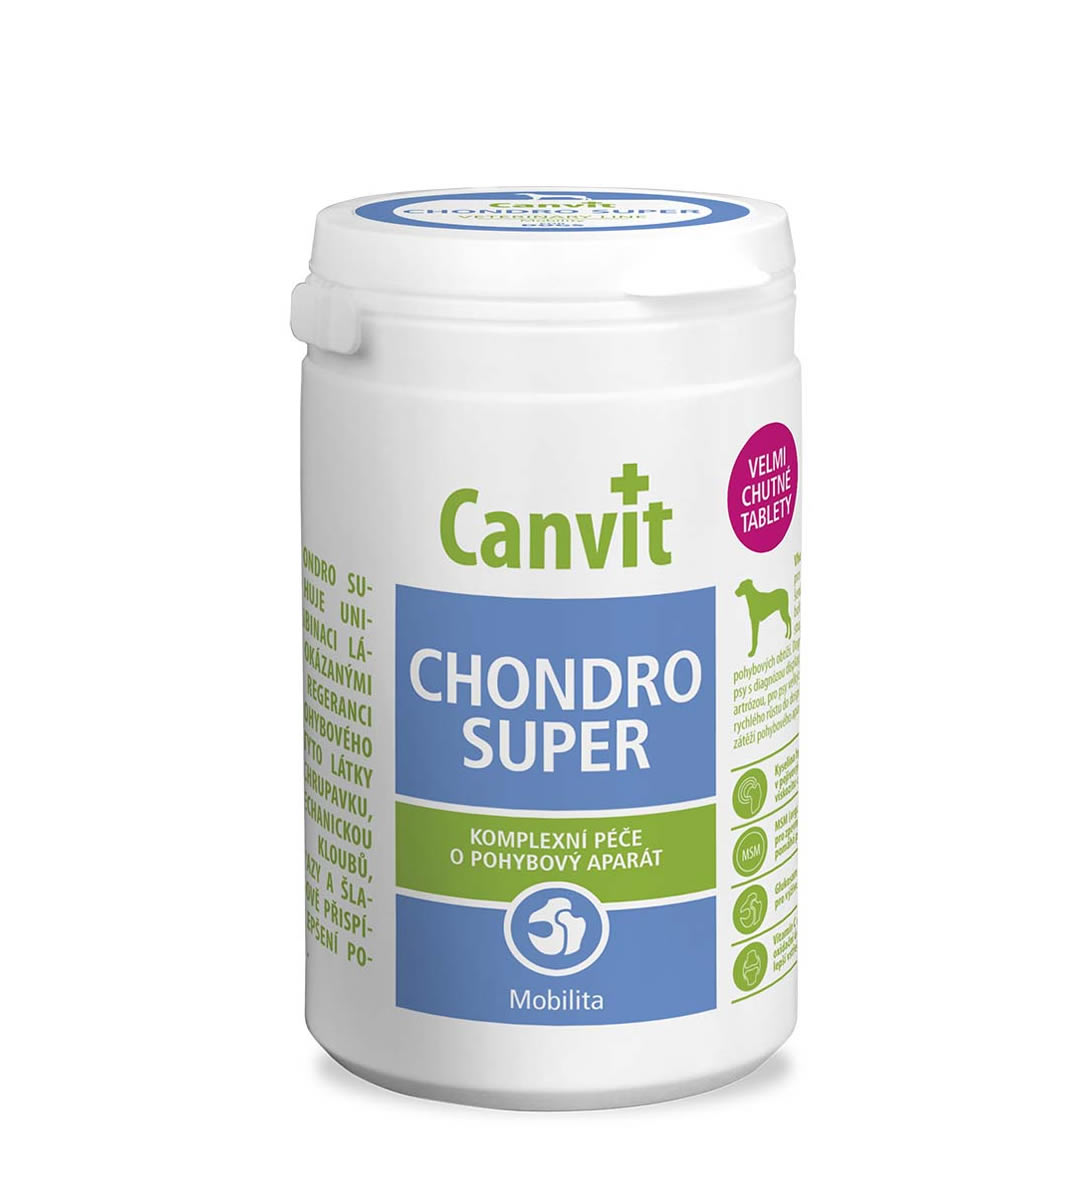 Canvit Chondro Super 230g